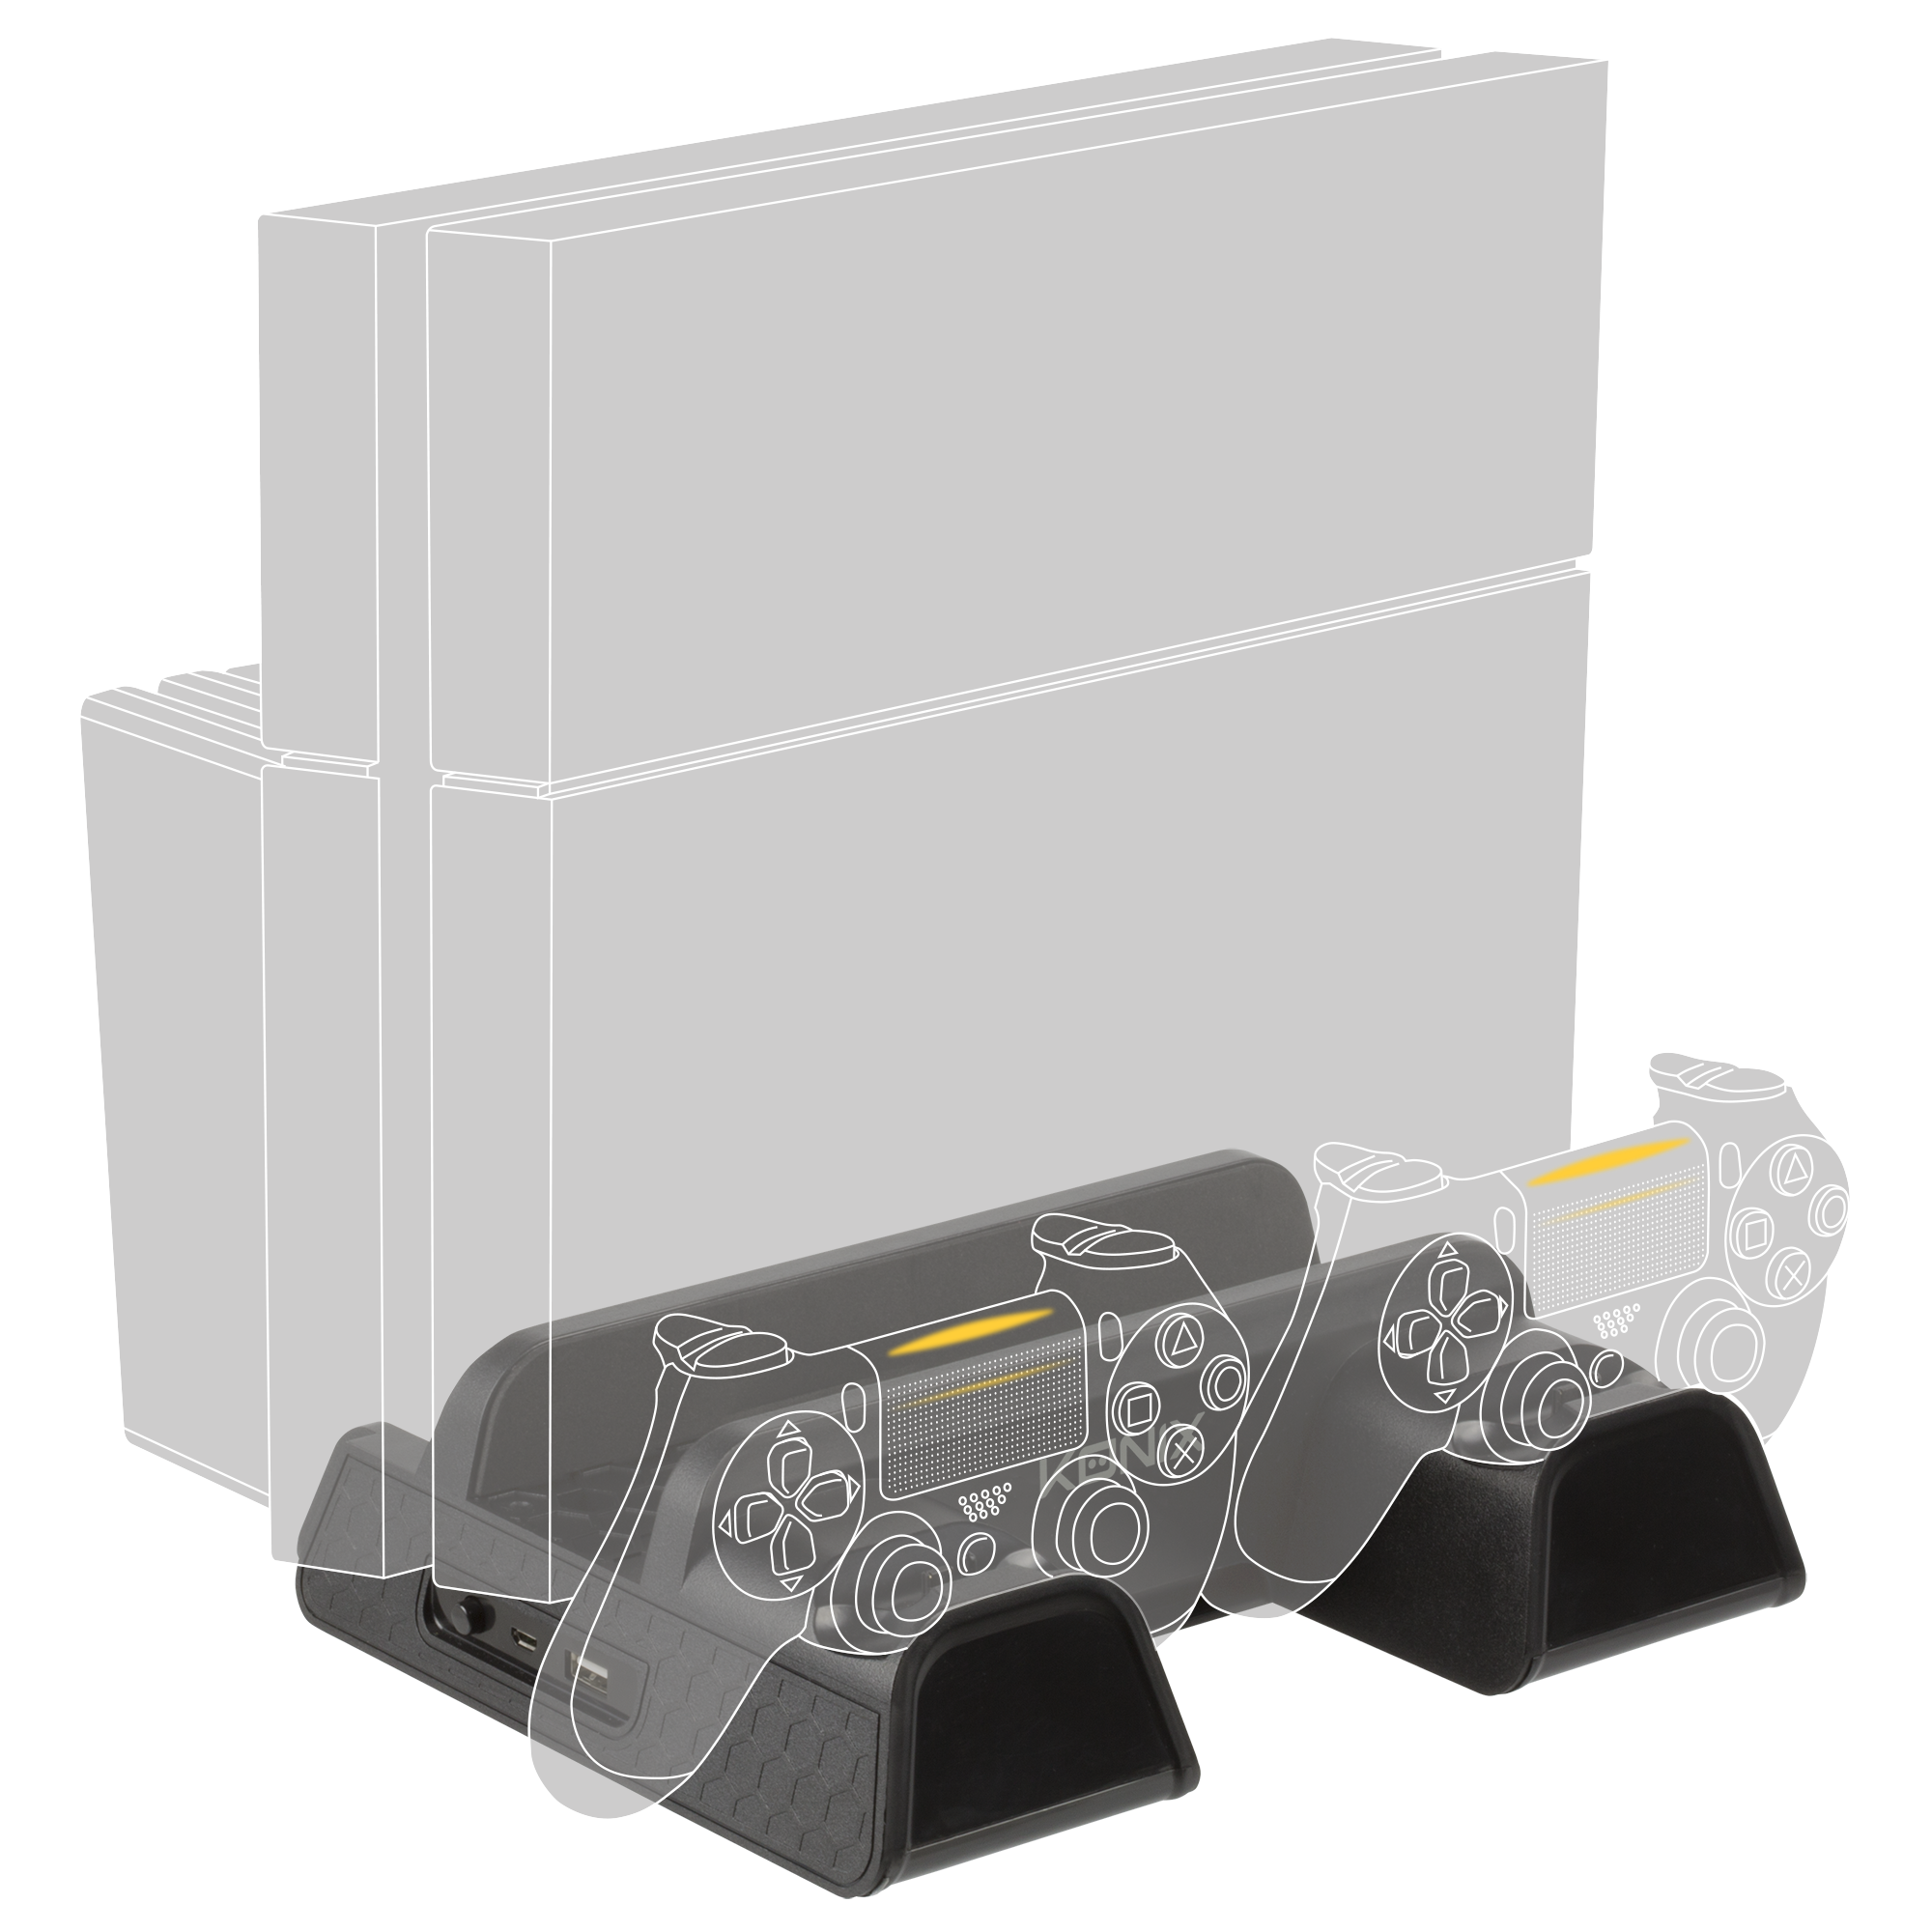 Konix Mythics Écran gaming Helios 27 PC, PS4, PS5, Switch et Xbox -  Résolution Full HD (1 920 x 1 080 px) - Fréquence 165 Hz - 1 ms - Dalle IPS